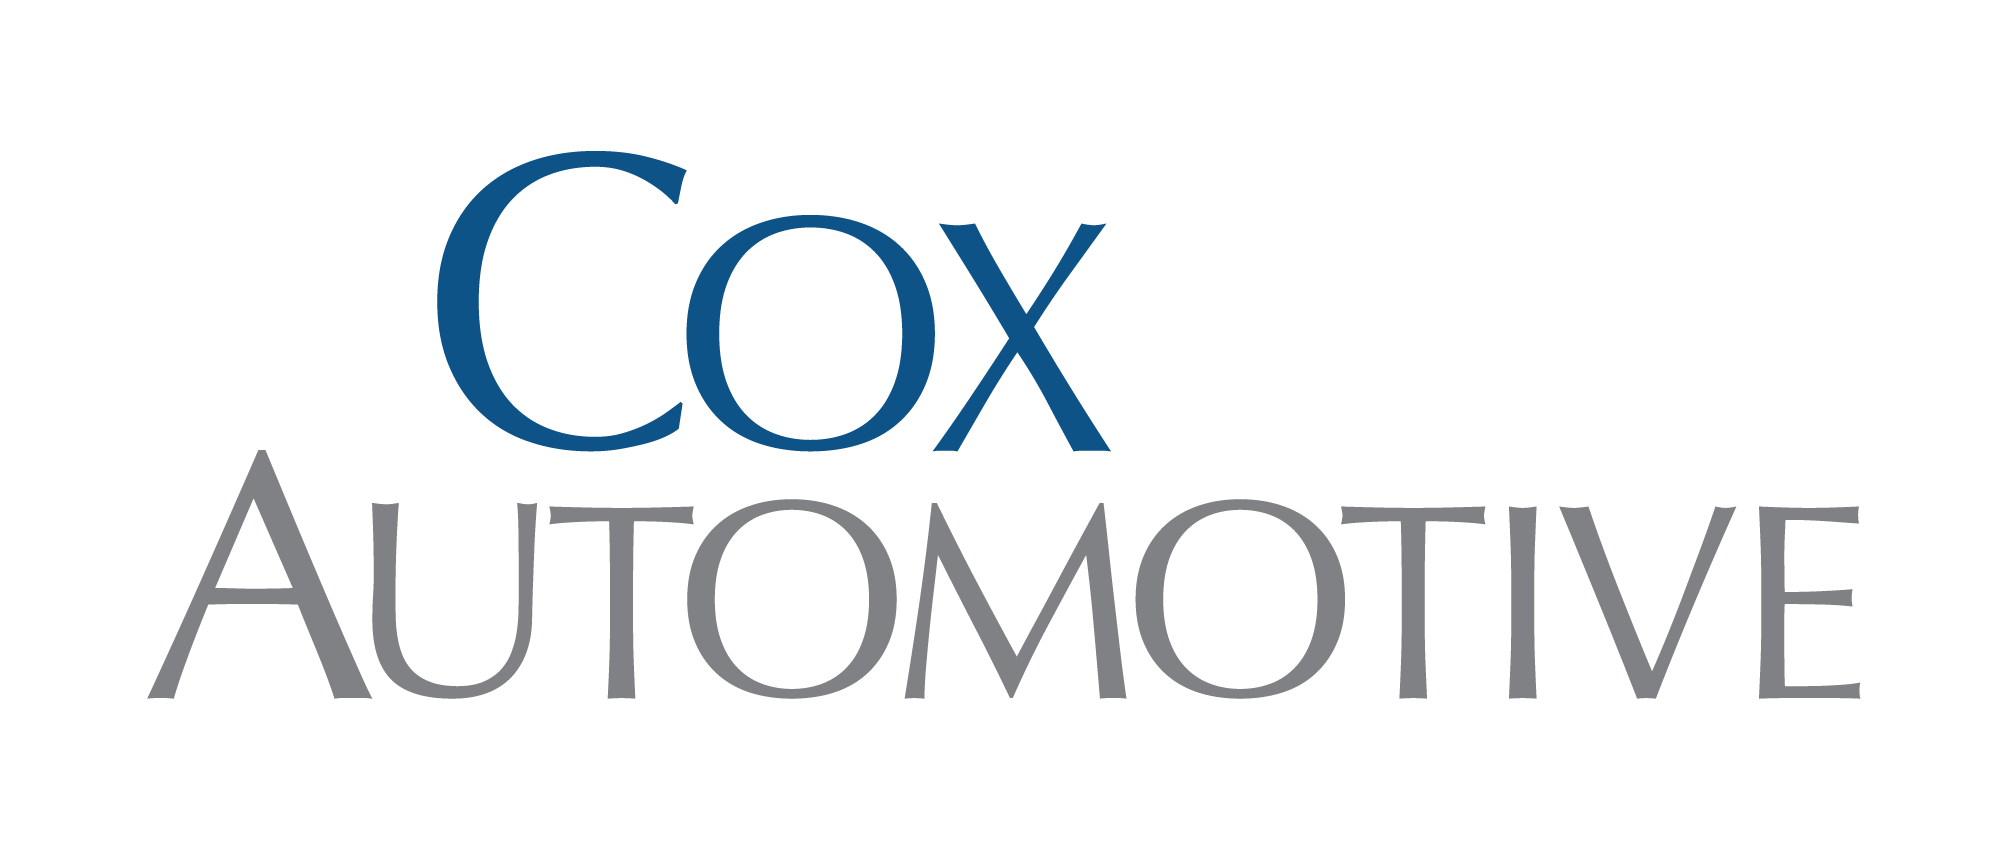 Cox-Automotive-Logo-2021